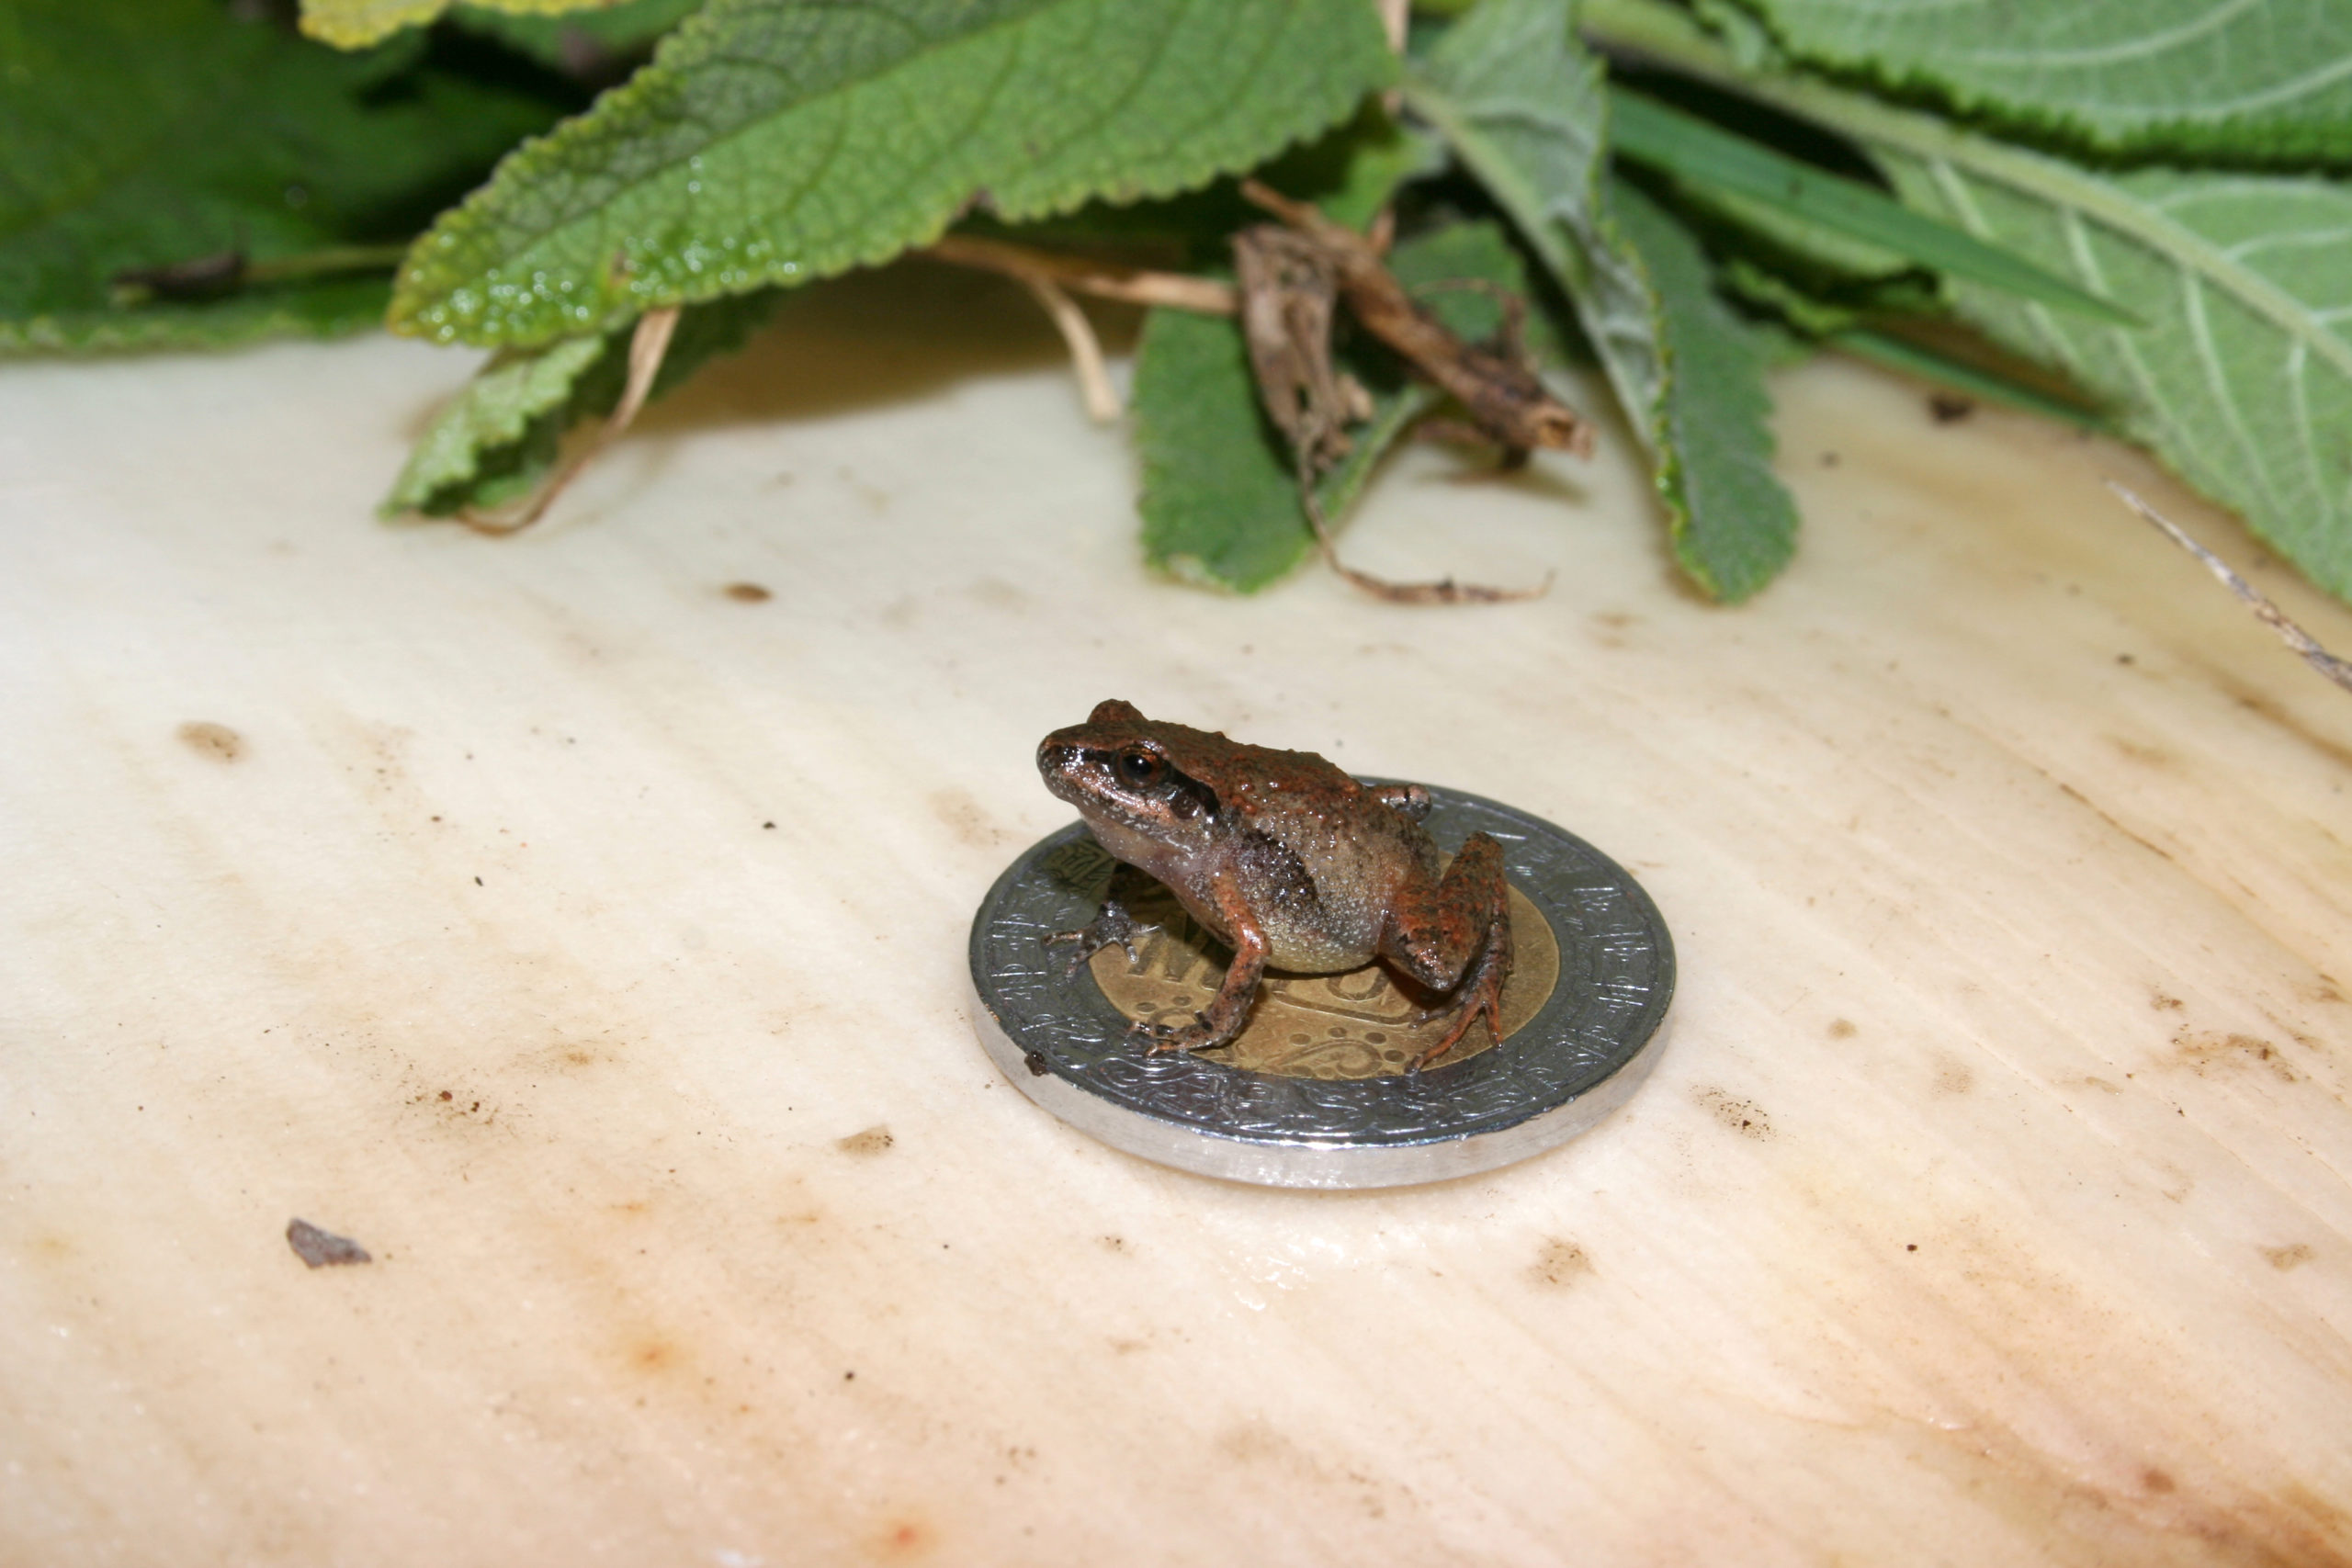 https://blog.nature.org/wp-content/uploads/2022/06/Craugaster-cueyatl-on-Mexican-10-pesos-coin-with-28mm-diameter.-Credit-Jeffrey-W.-Streicher-scaled.jpg